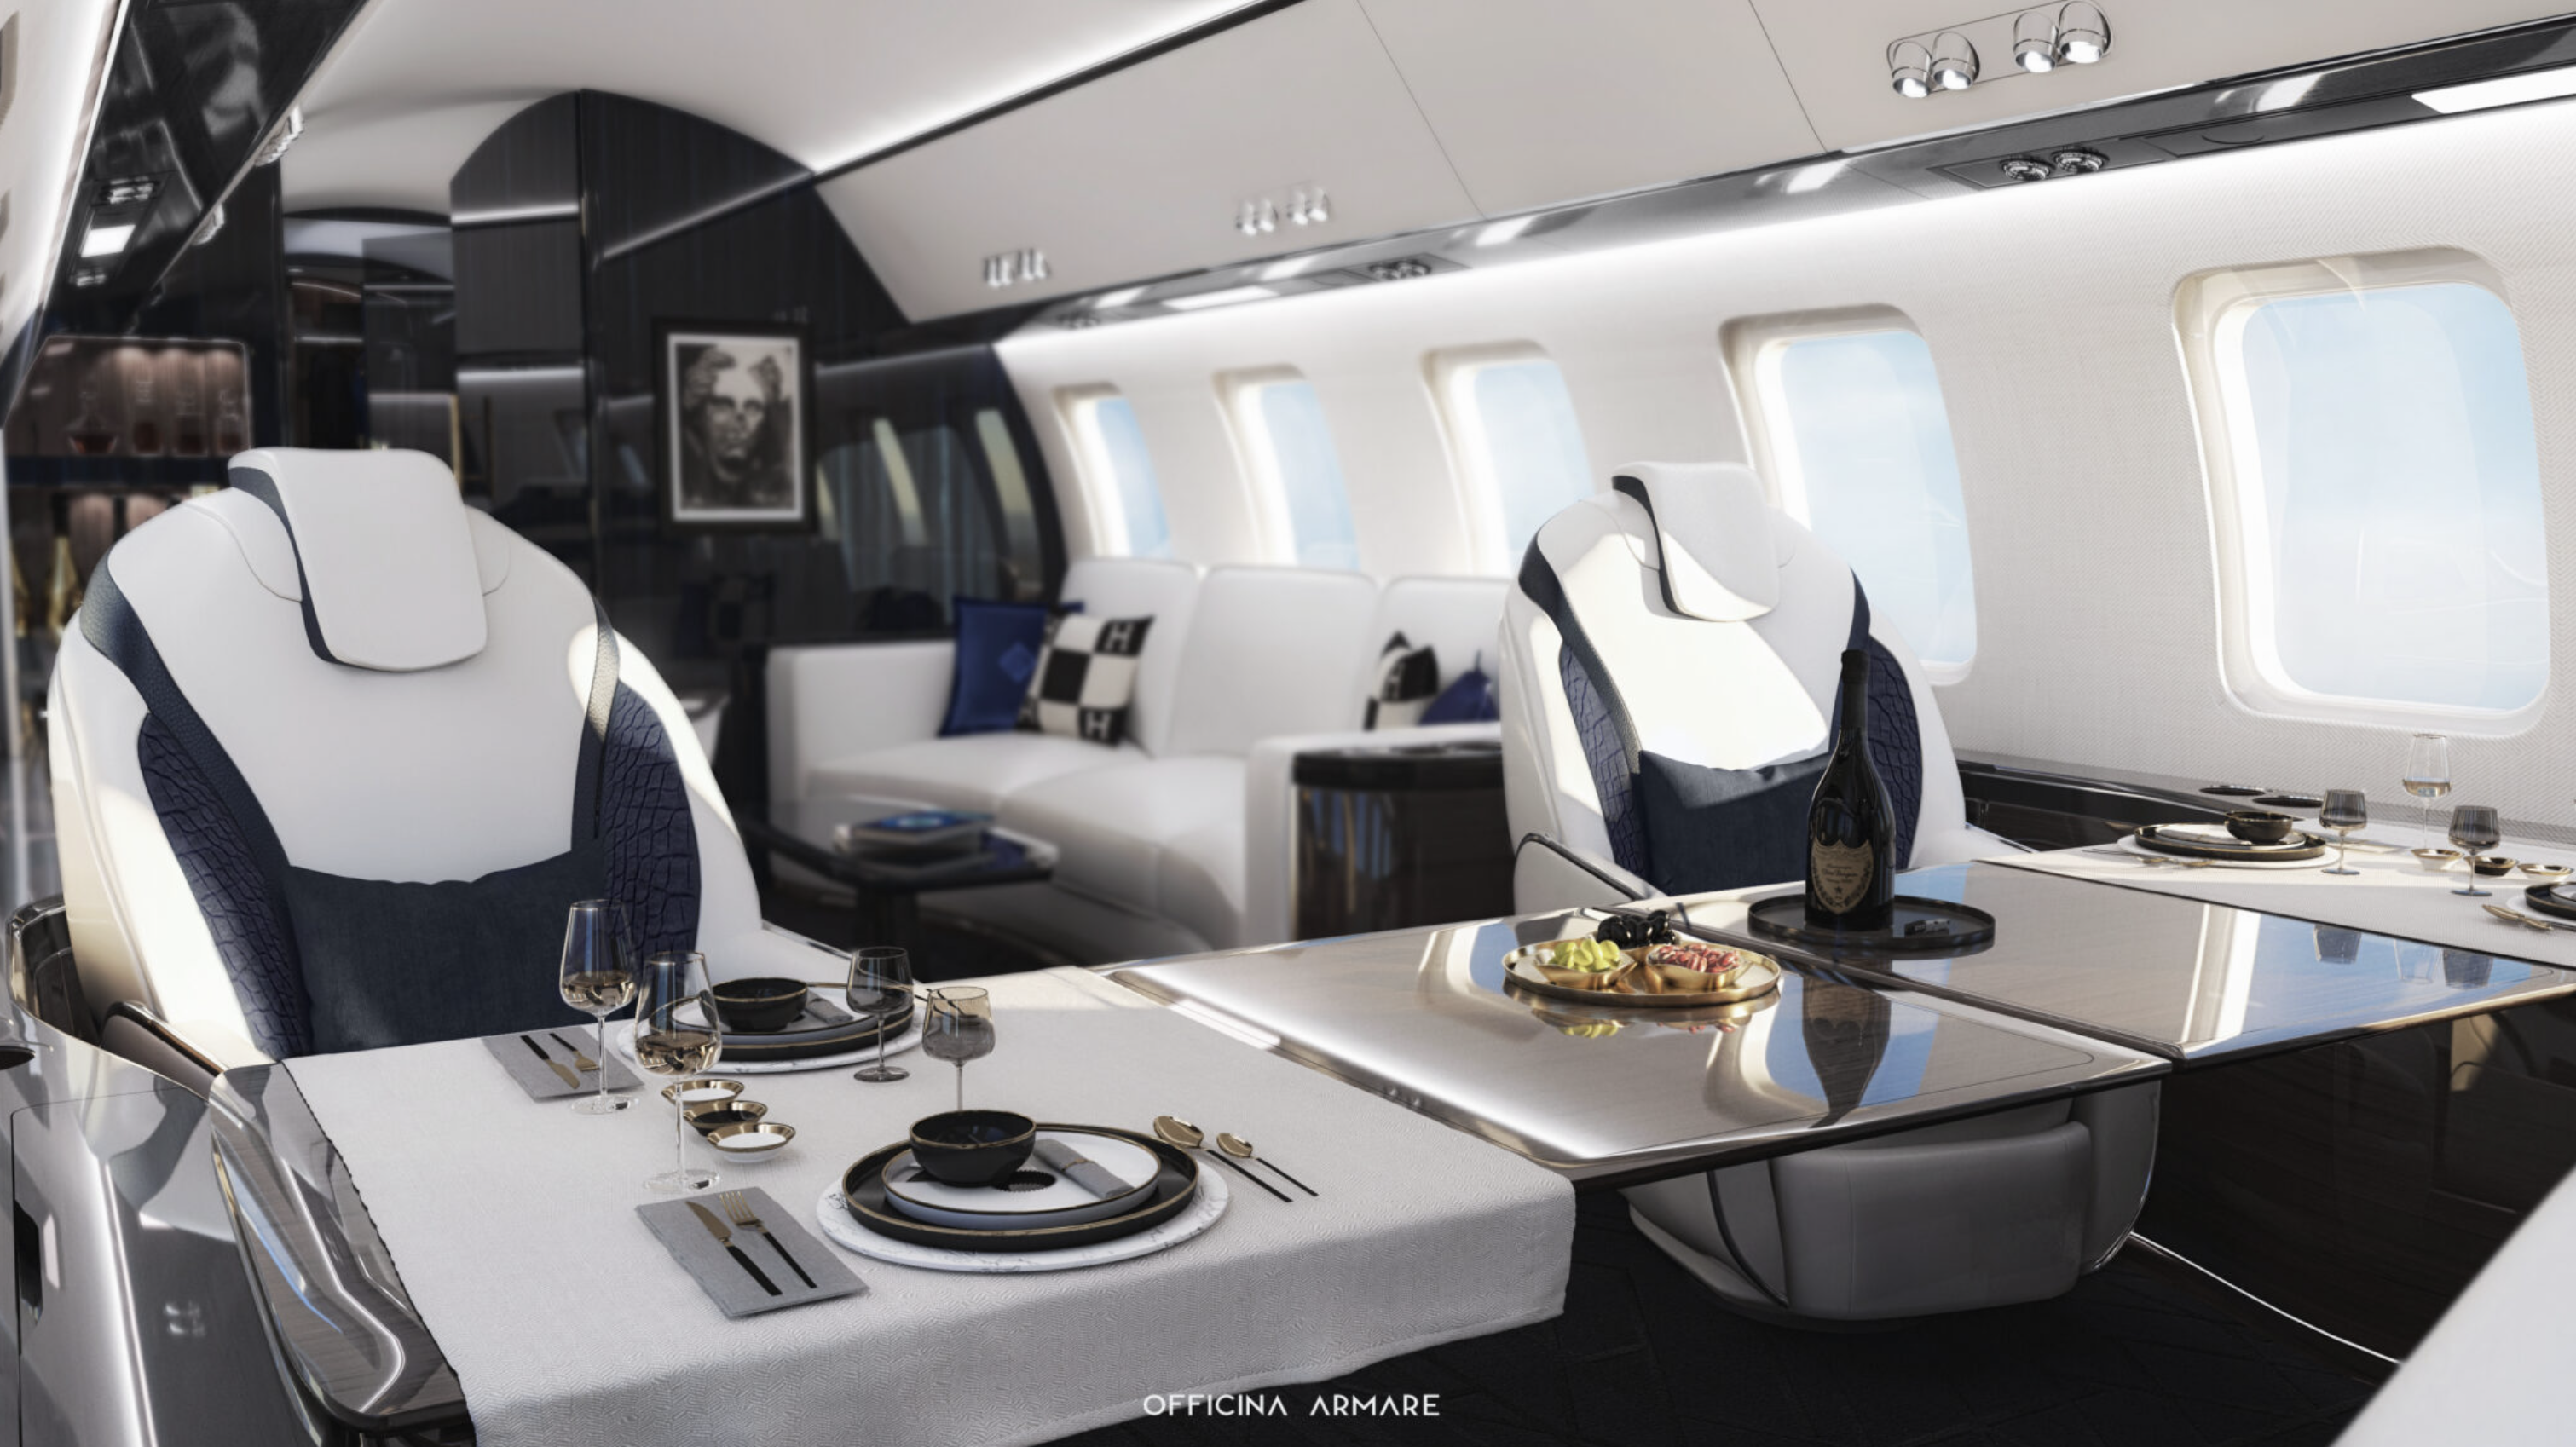 Jet privado Bombardier 6000